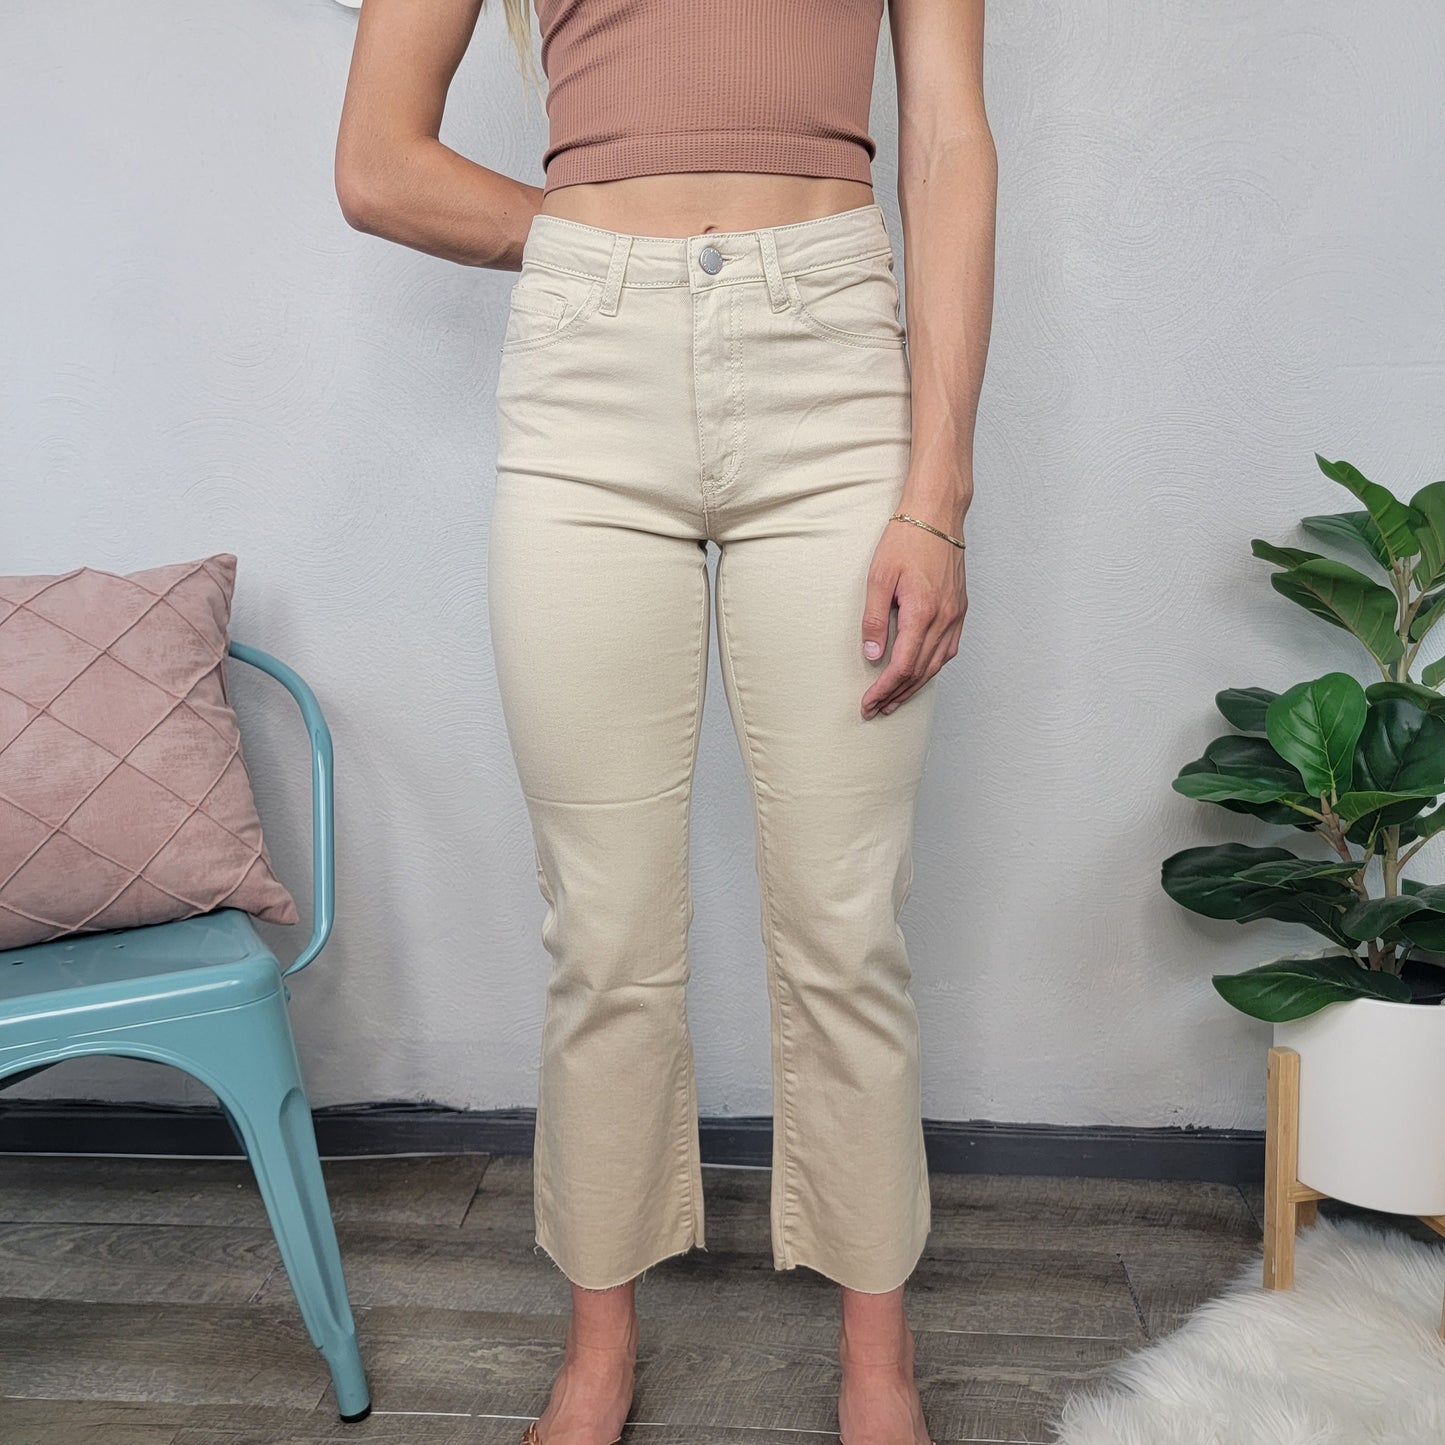 Soleil Khaki Ankle Jeans